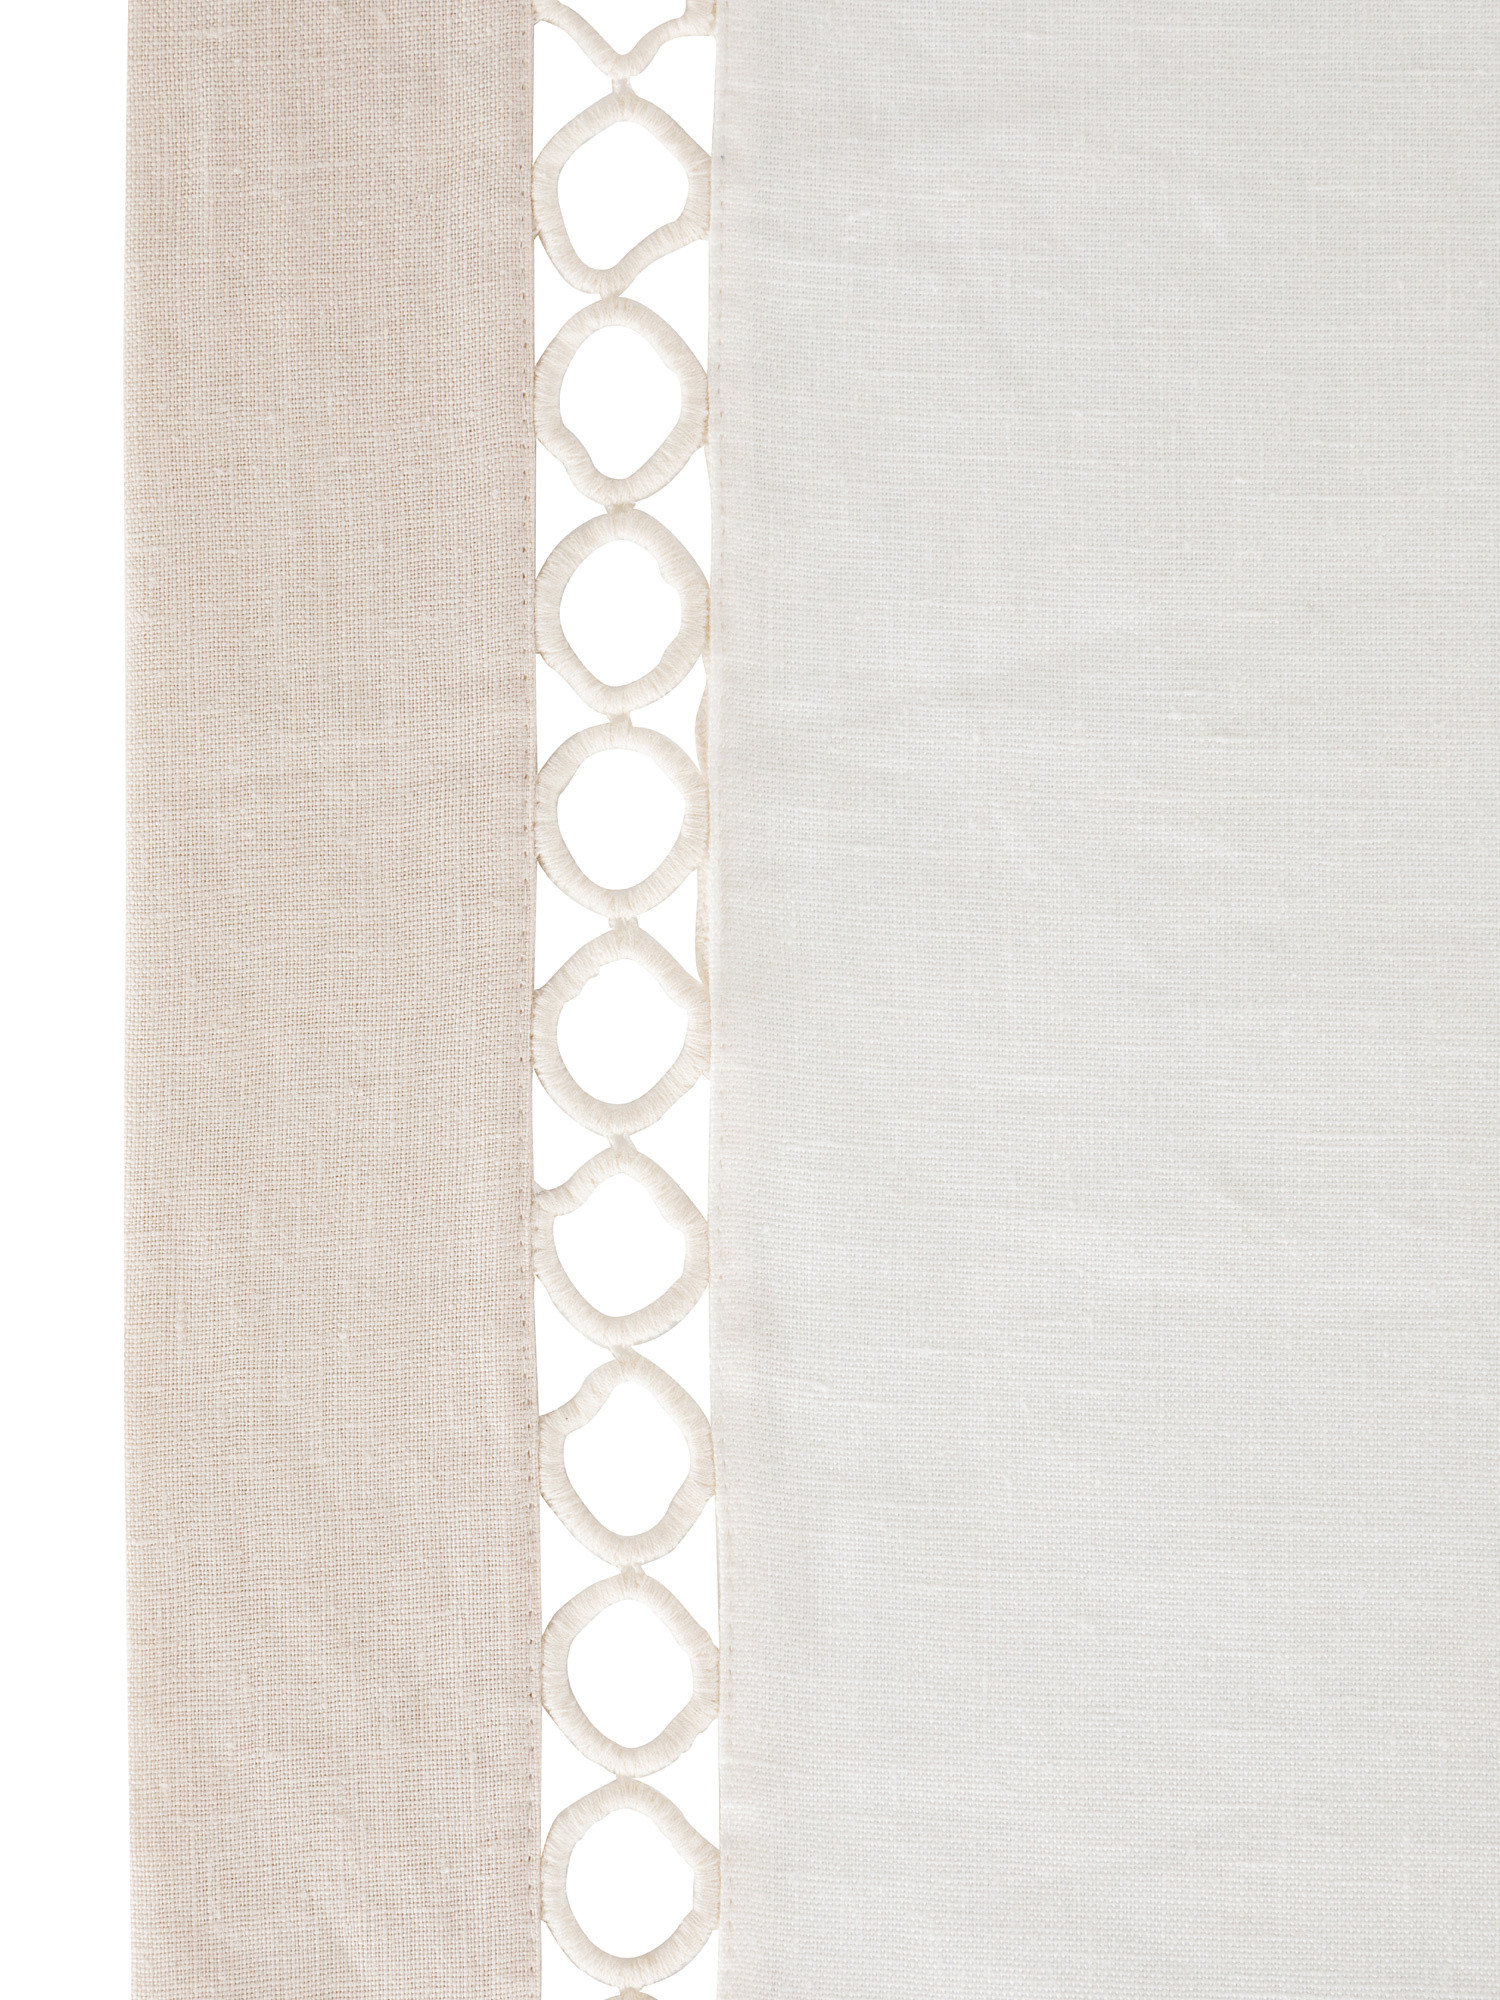 Runner puro lino bordo in cotone, Bianco, large image number 1